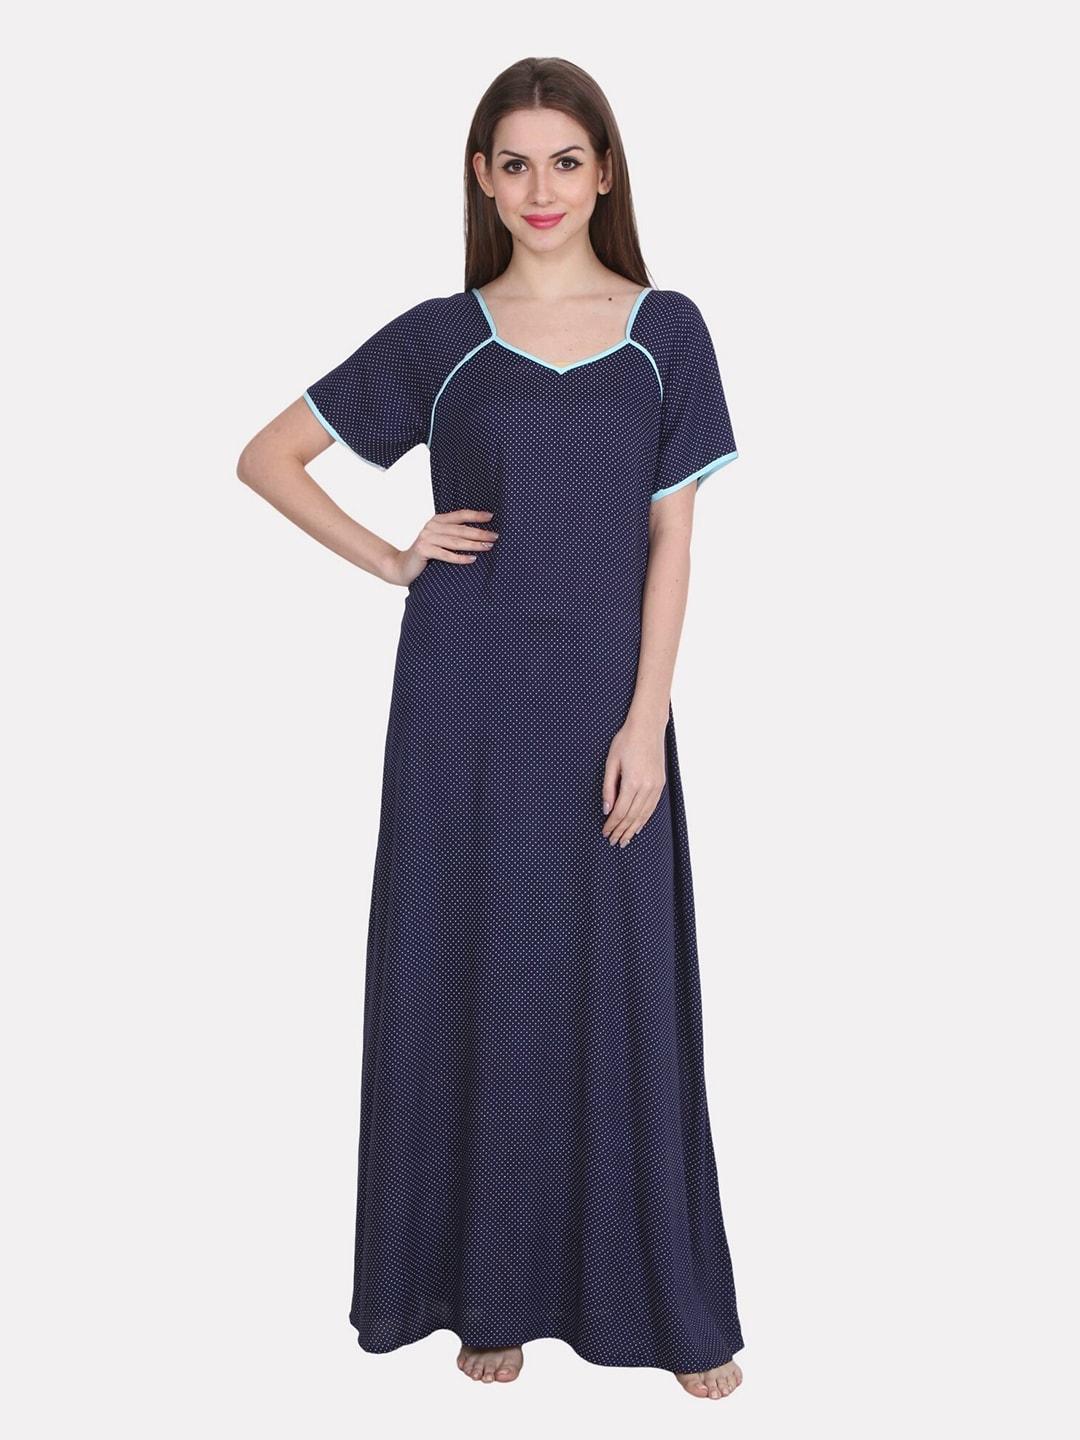 PATRORNA Women Blue Printed Maxi Nightdress